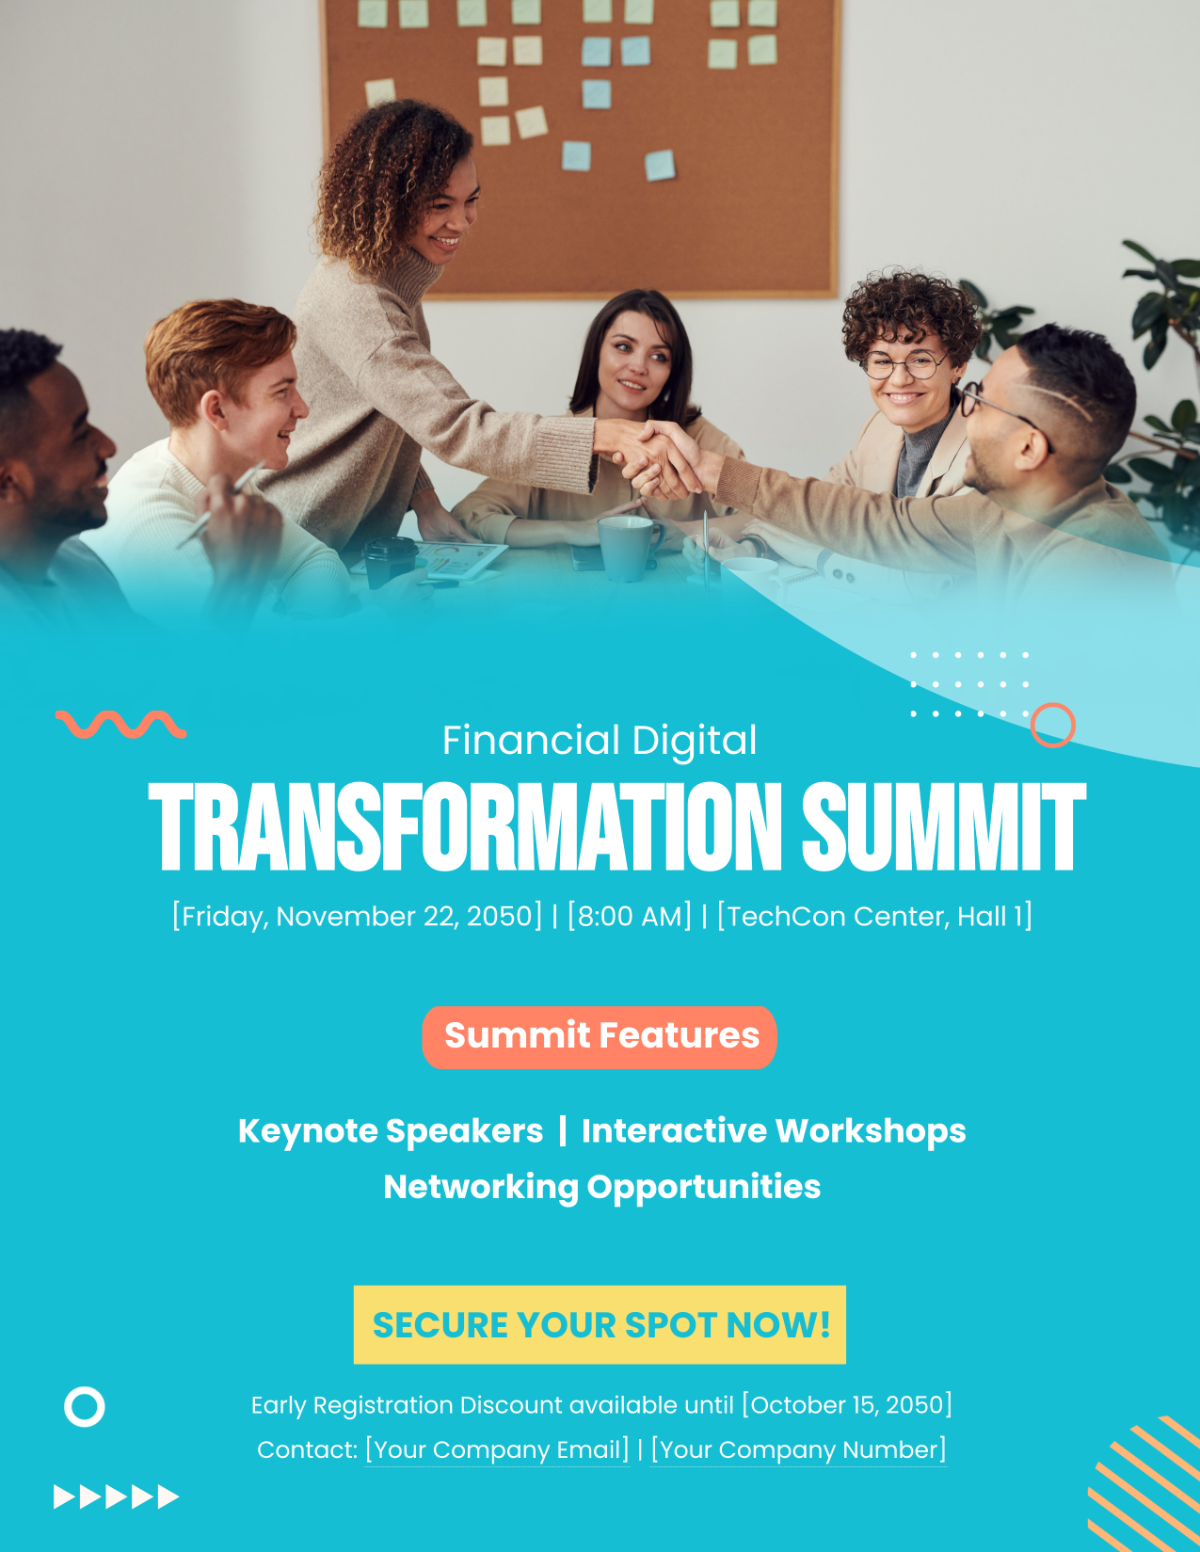 Financial Digital Transformation Summit Flyer Template